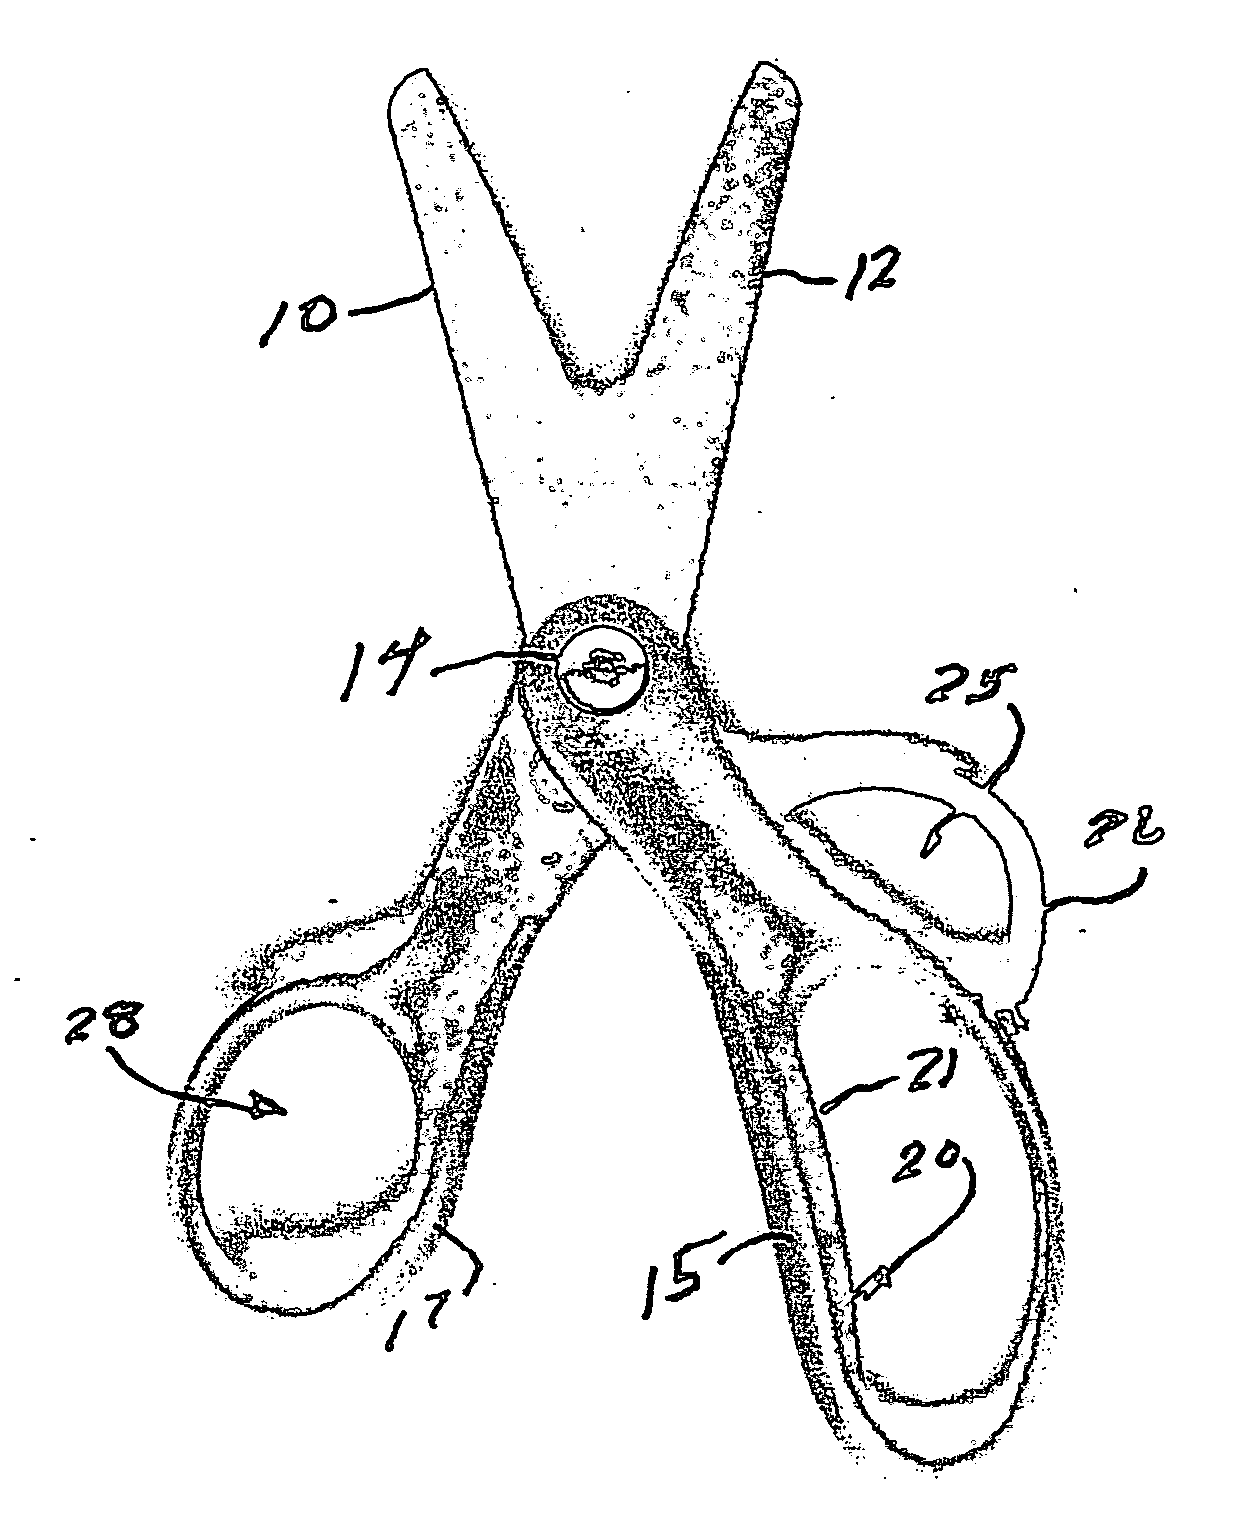 Adaptive scissors